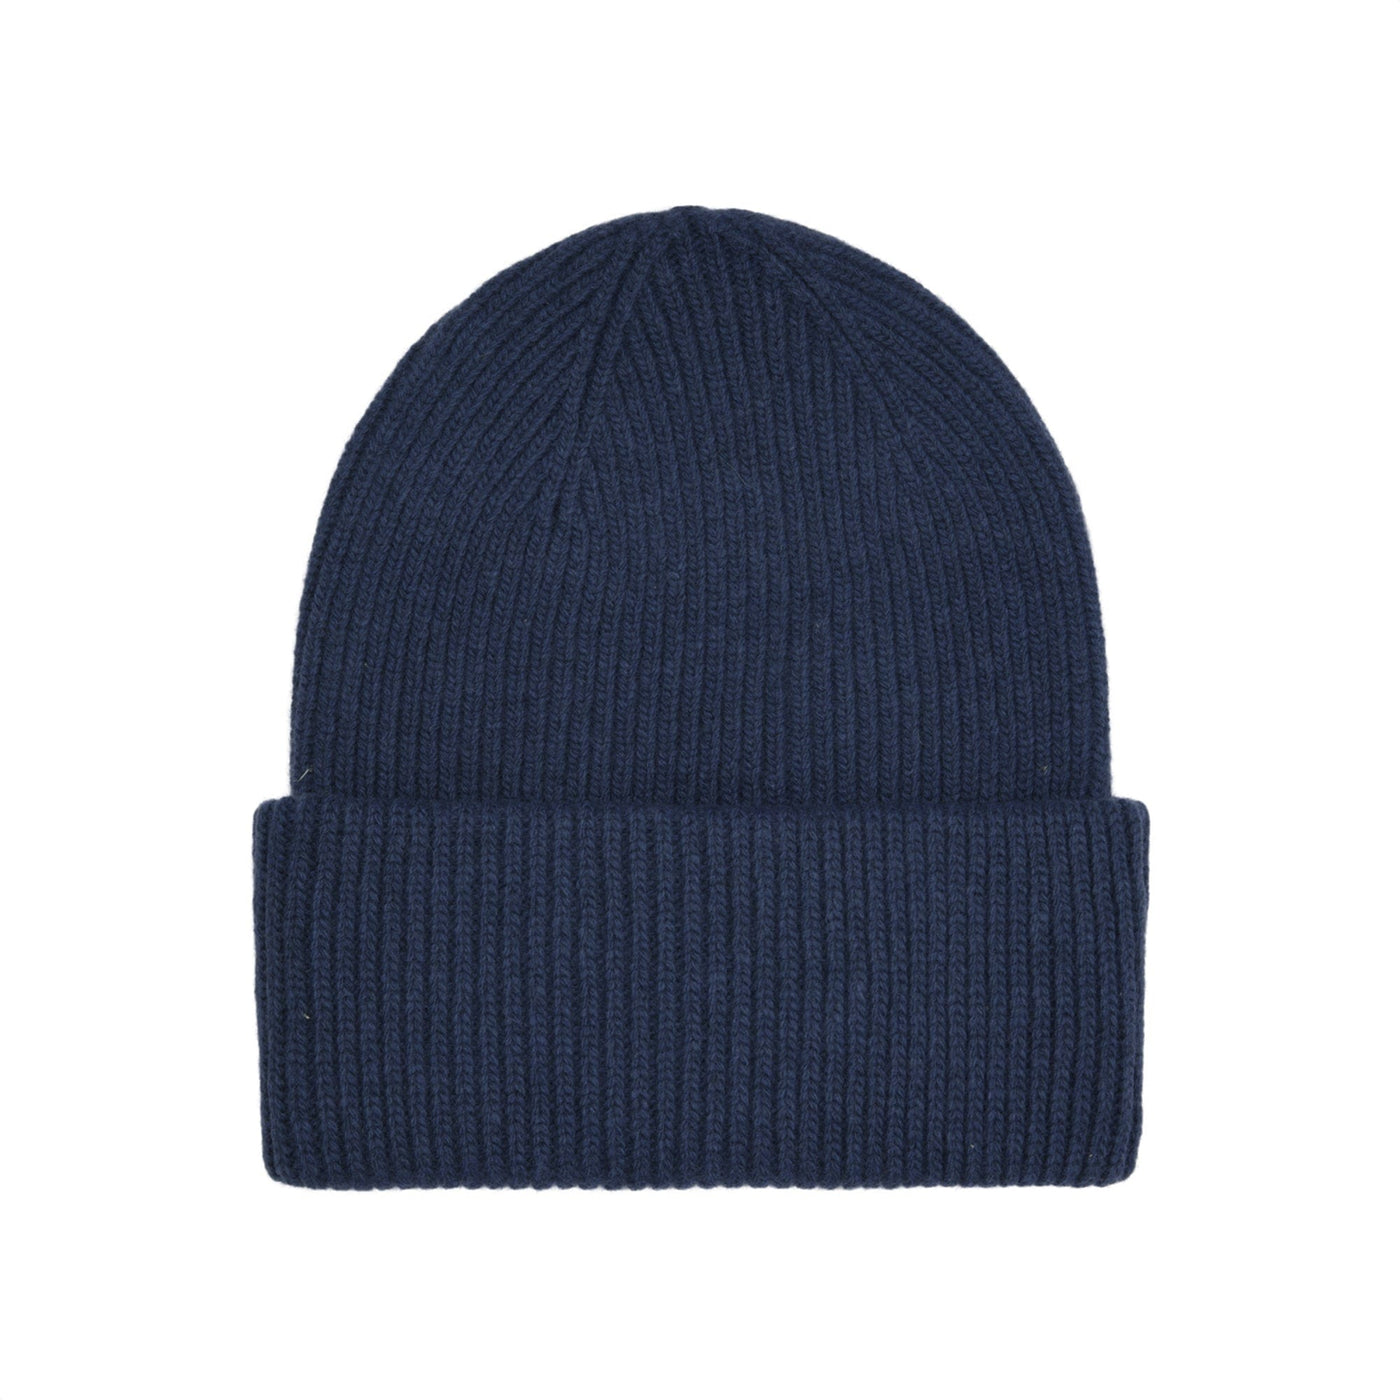 Merino Wool Hat Navy Blue